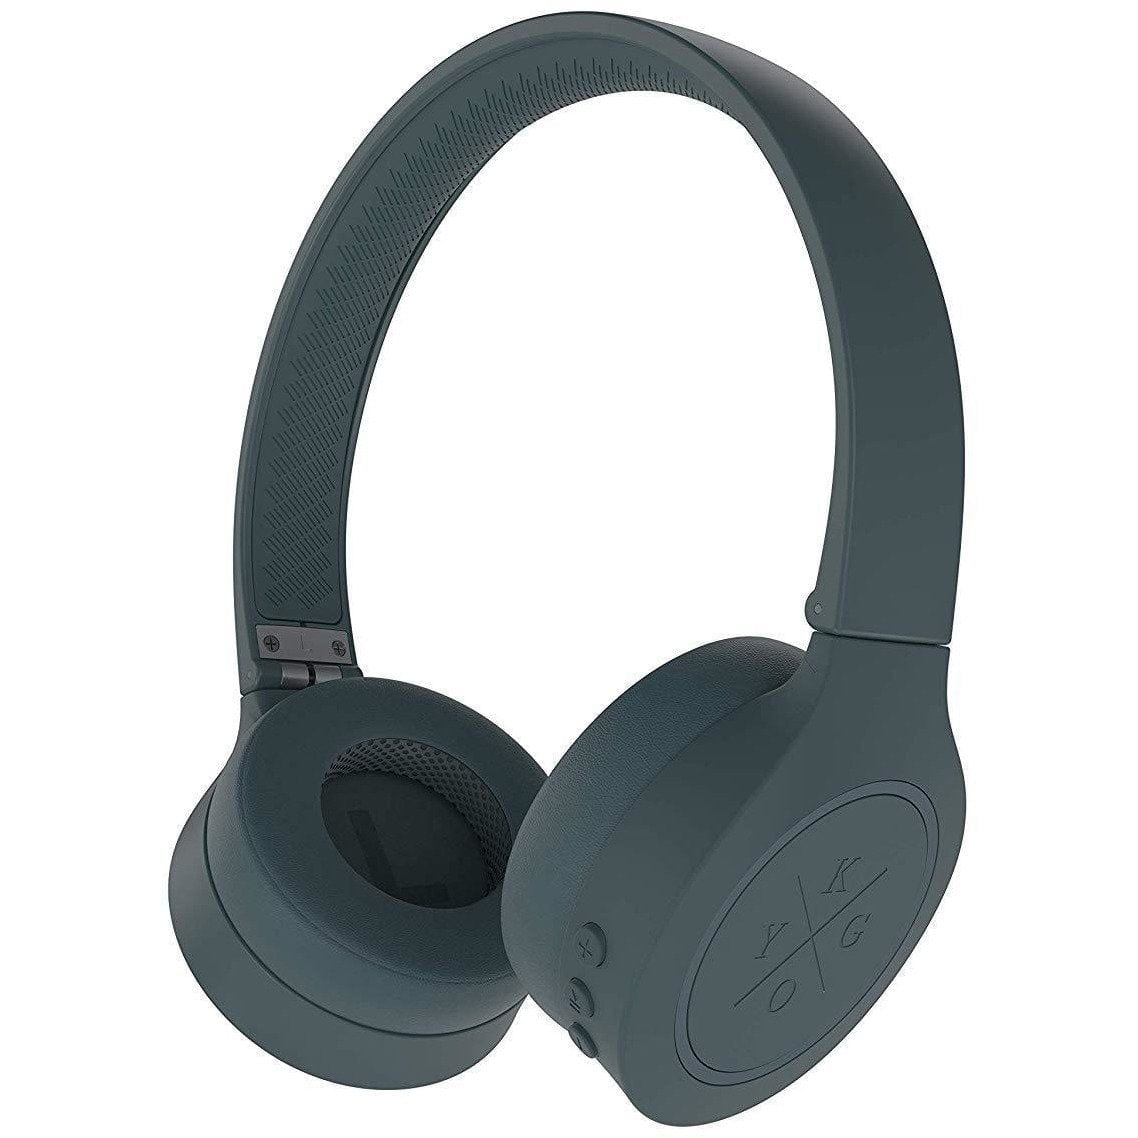 KYGO A4/300 WIRELESS BLUETOOTH 4.2 ON EAR HEADPHONES - STORM GREY [ACCESSORIES]